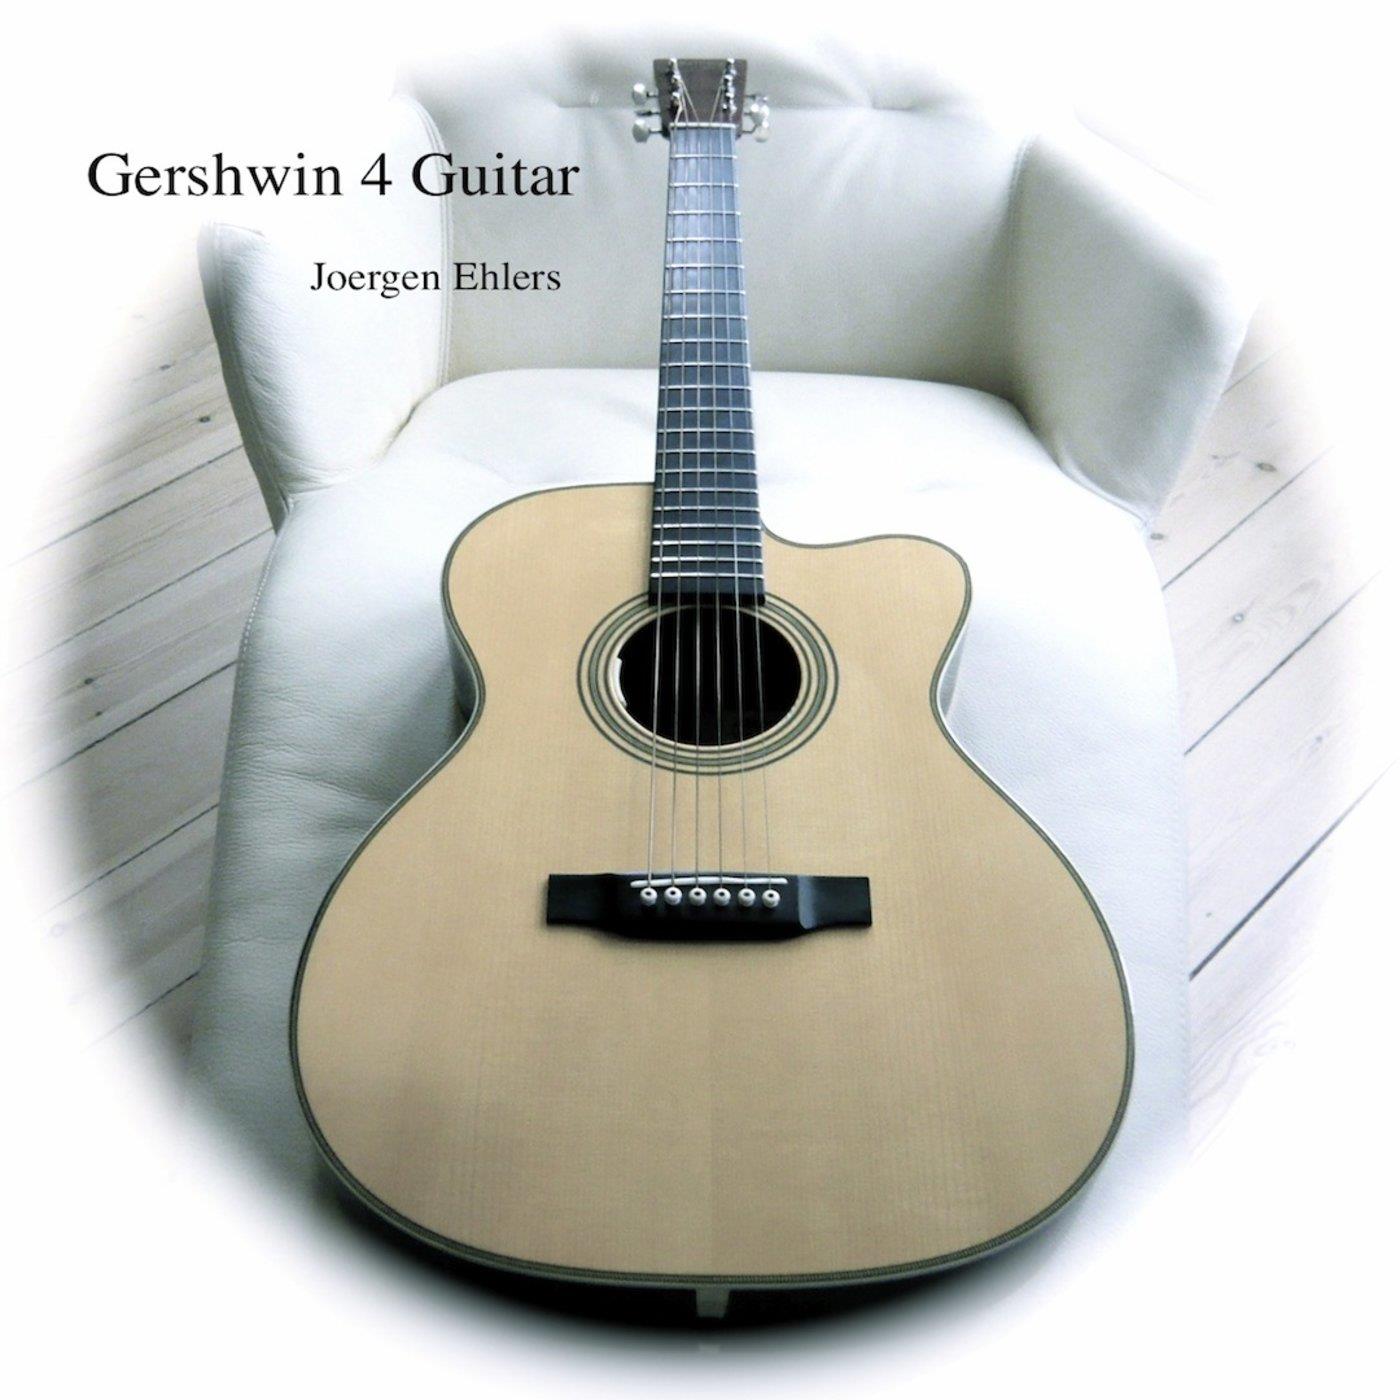 Gershwin 4 Guitar